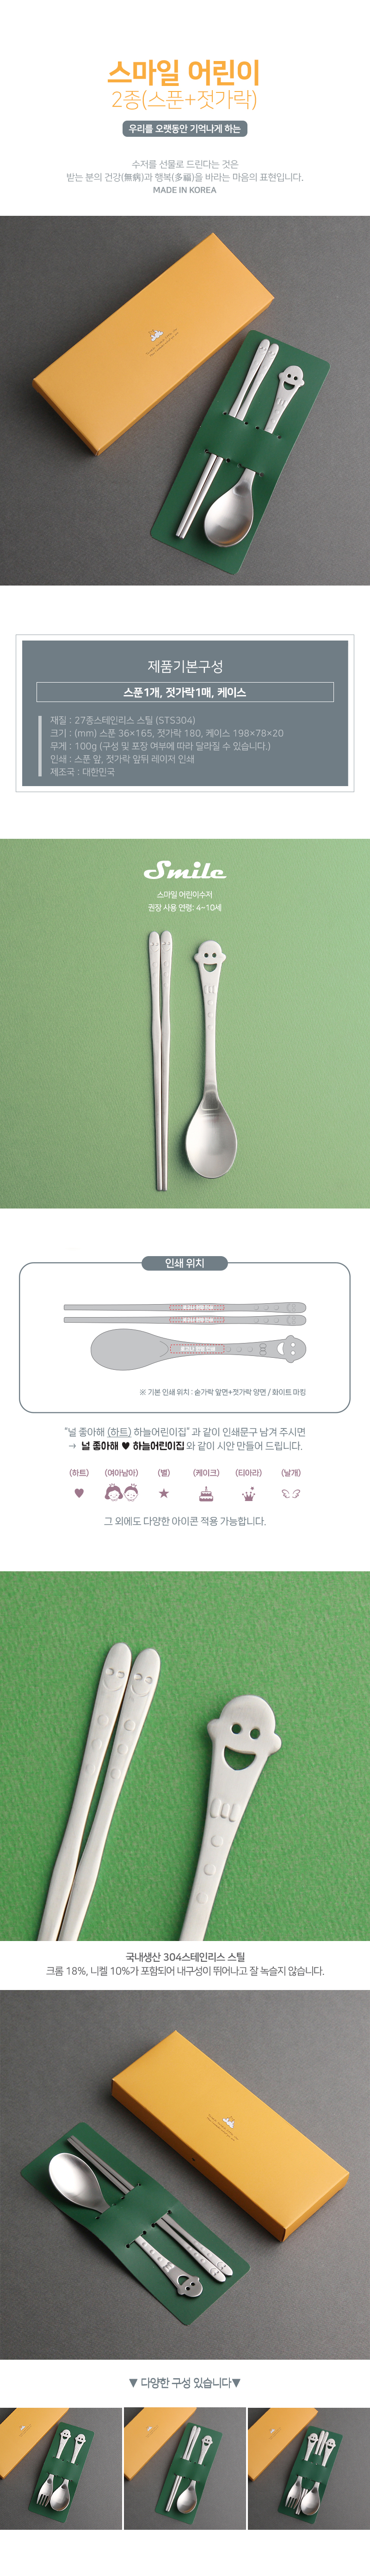 K901_spoonstick.jpg